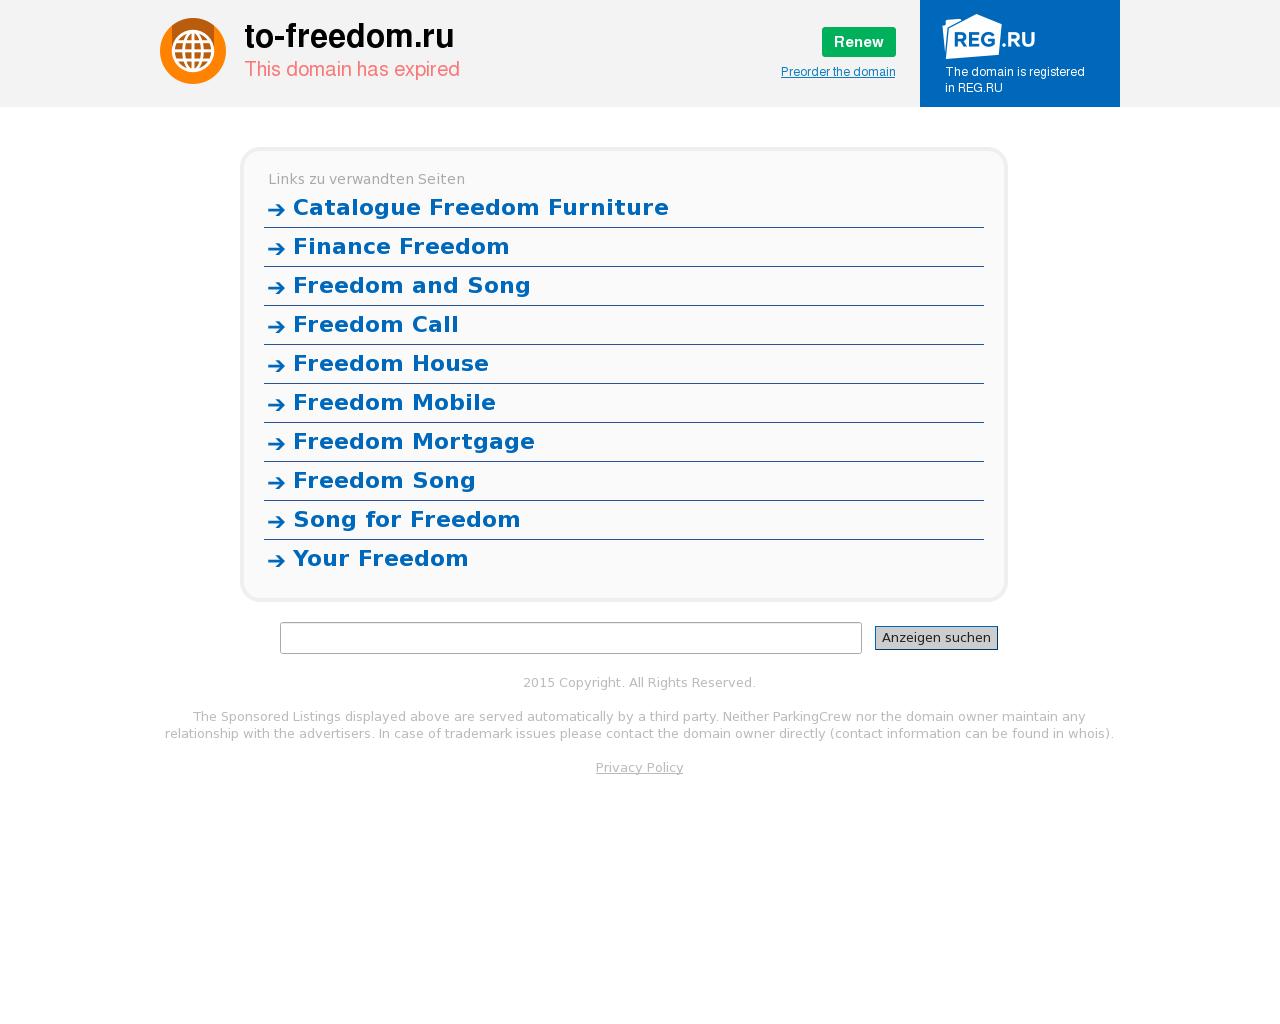 Изображение сайта to-freedom.ru в разрешении 1280x1024